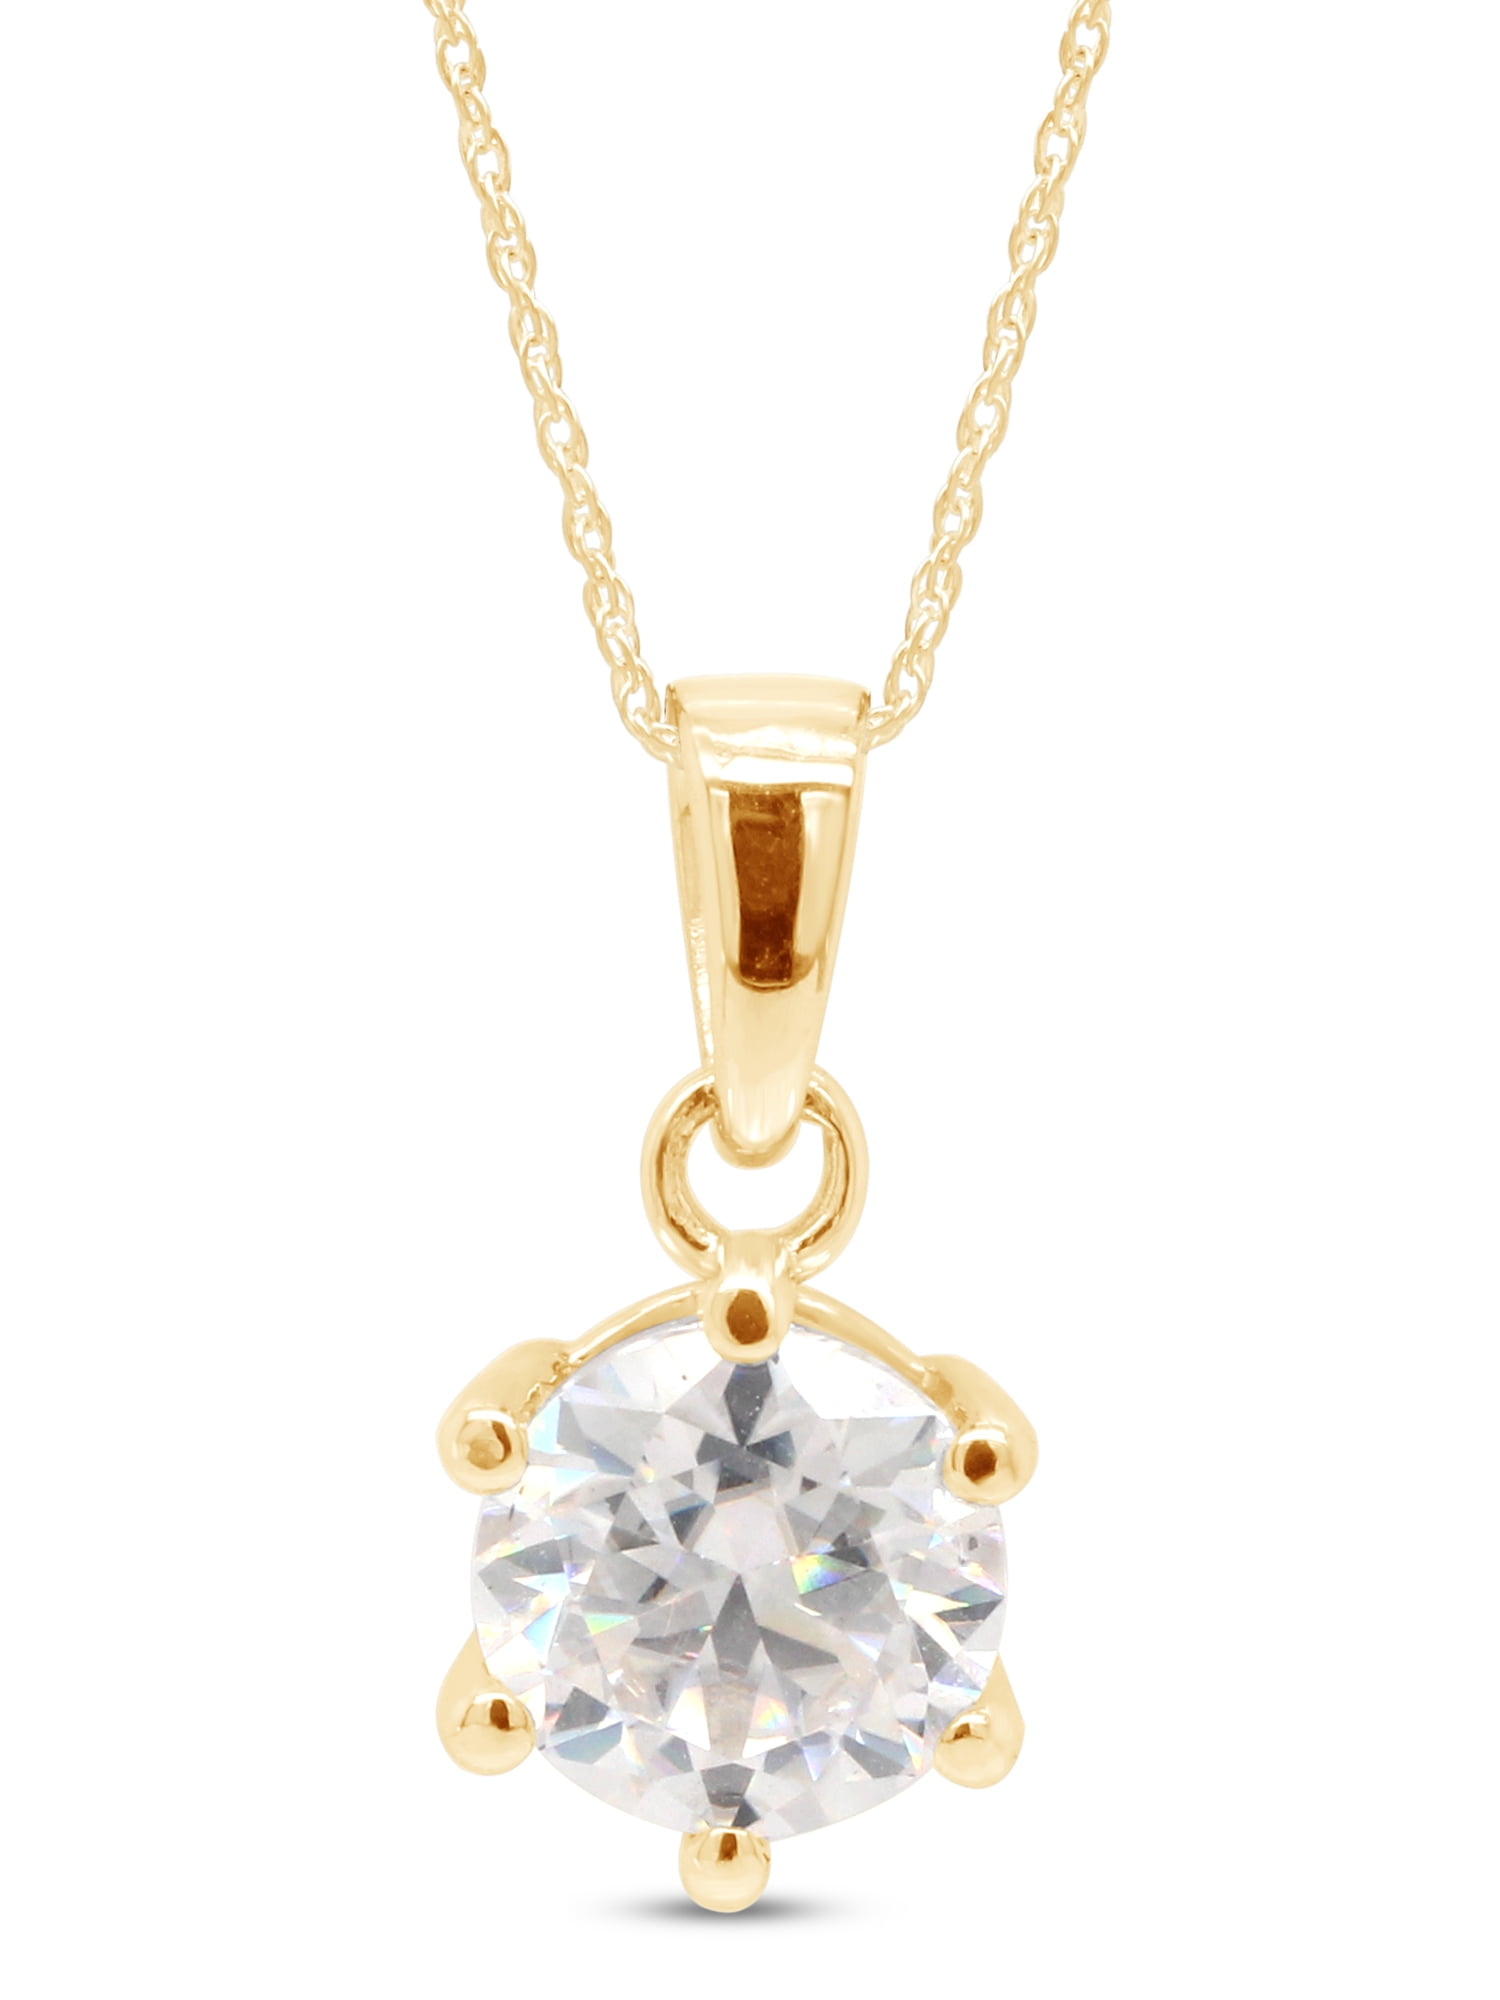 Moissanite Diamond Necklace Diamond Pendant 14K Gold 6.5mm 1 Carat Brilliant Round Moissanite Solitaire Pendant Necklace